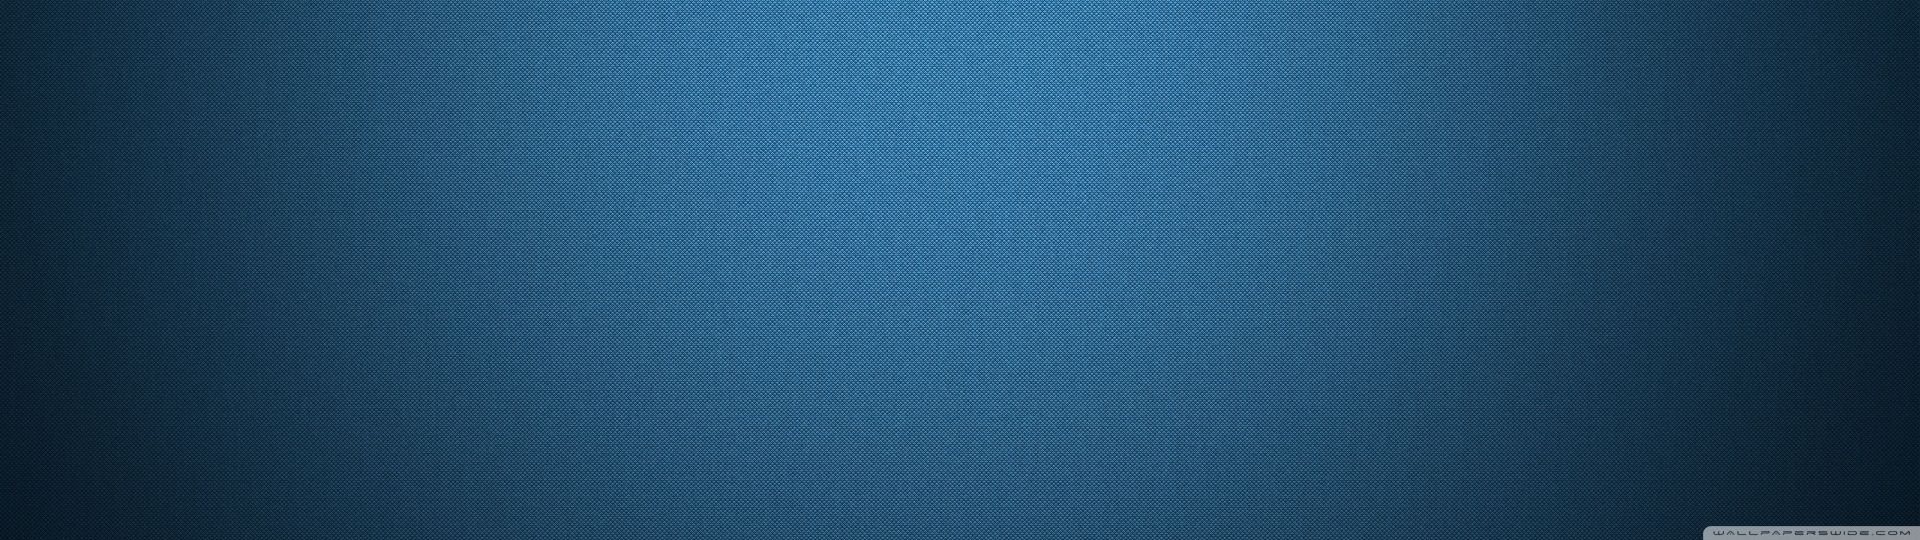 Dark Blue Background HD desktop wallpaper : High Definition ...